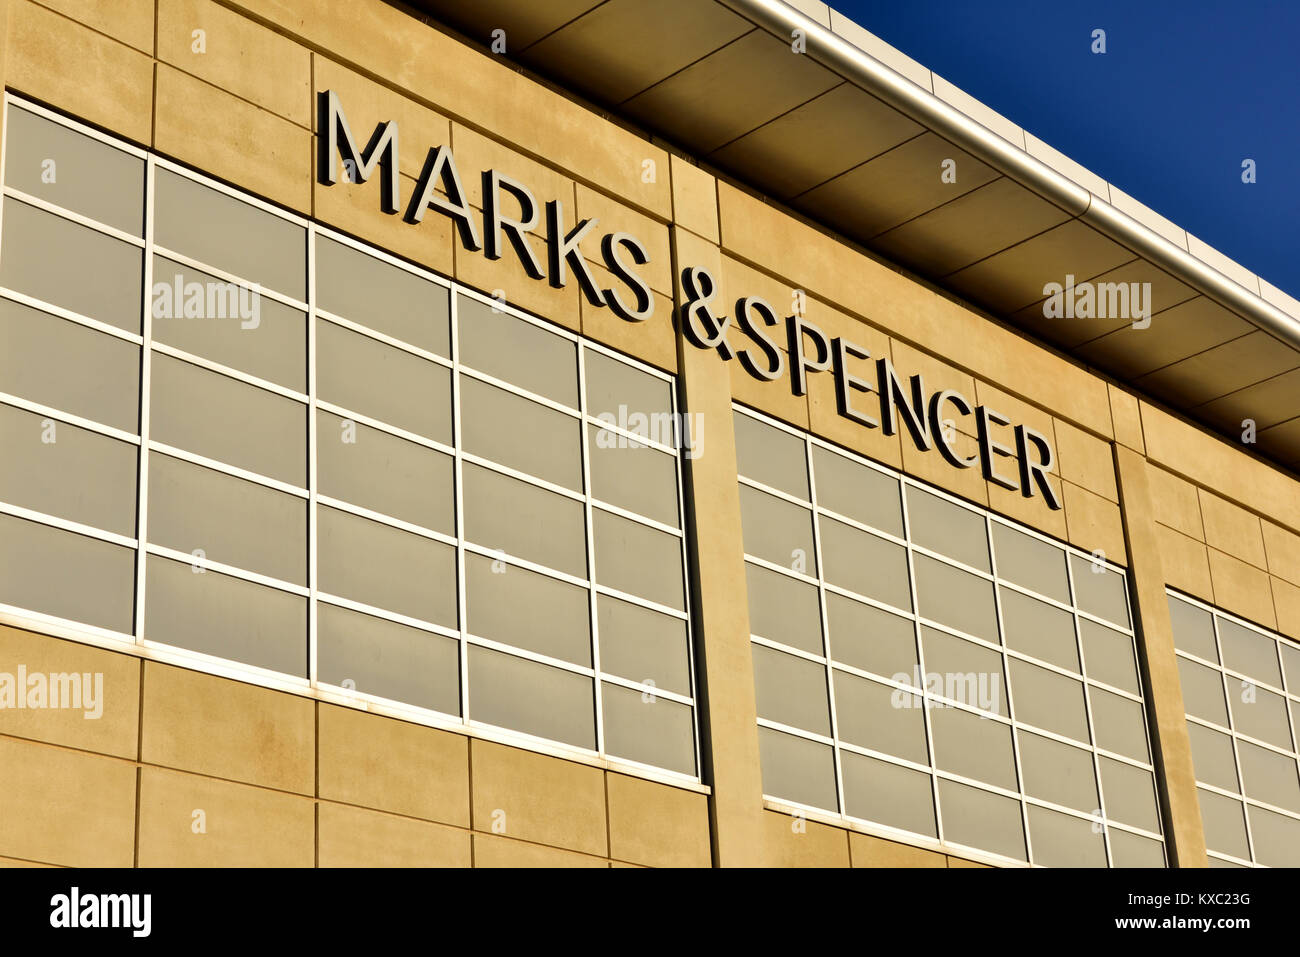 Marks & Spencer sign Stock Photo